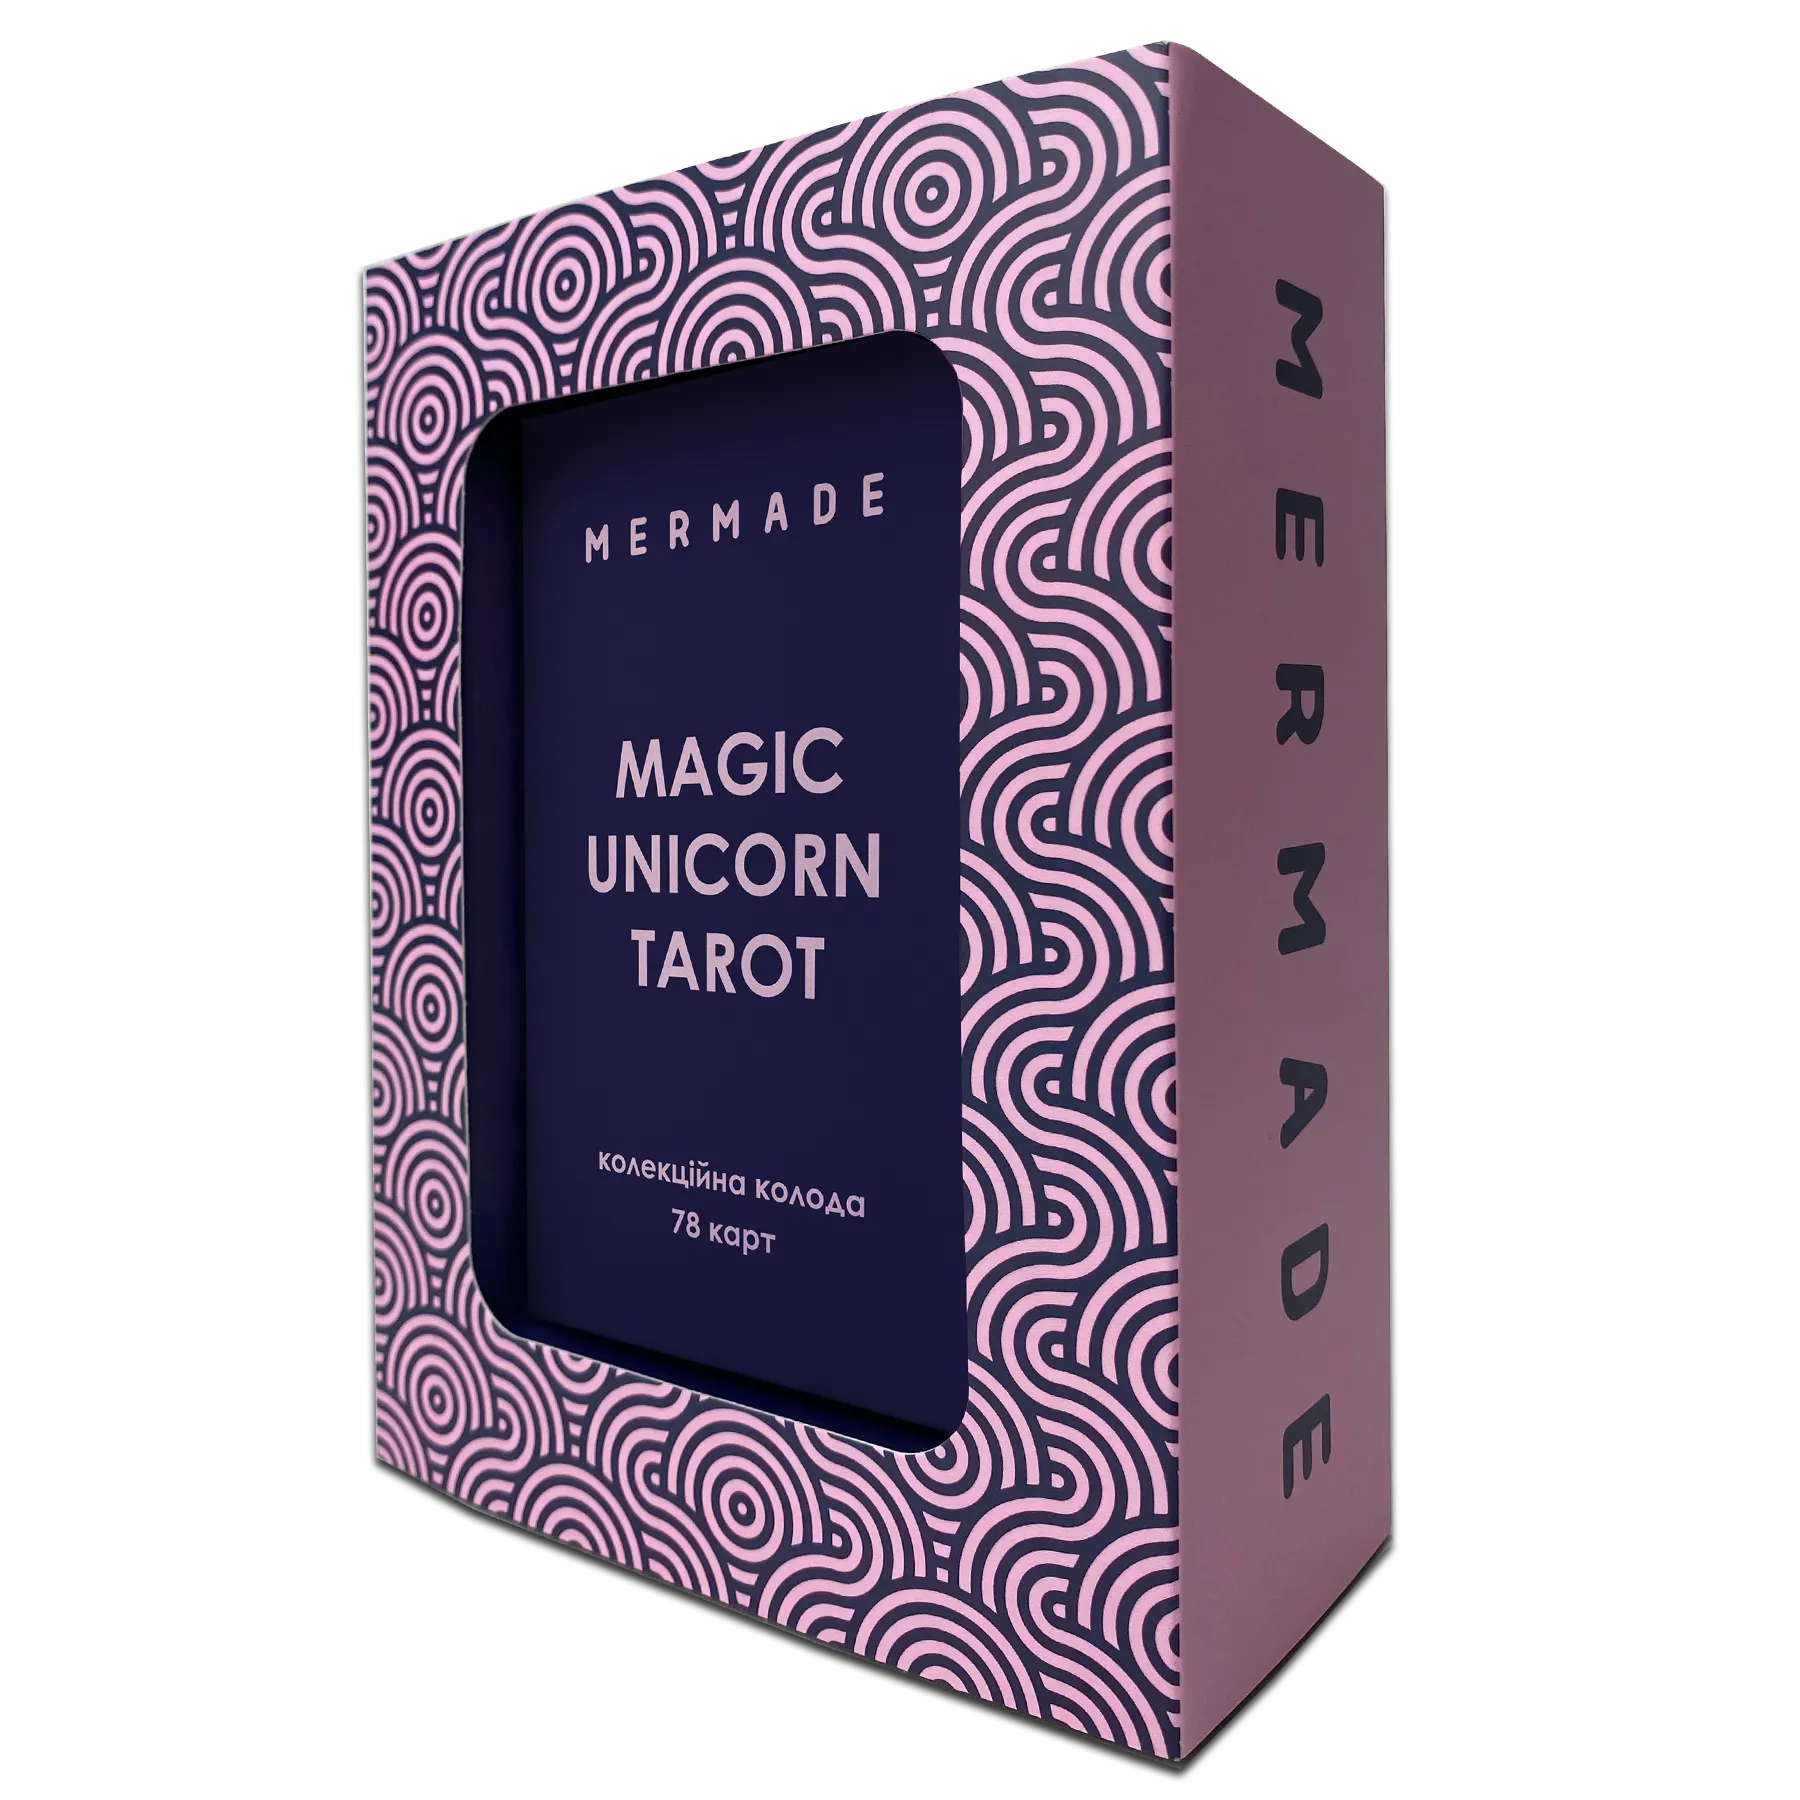 Лимитированная колода карт Mermade Magic Unicorn Tarot - фото 2